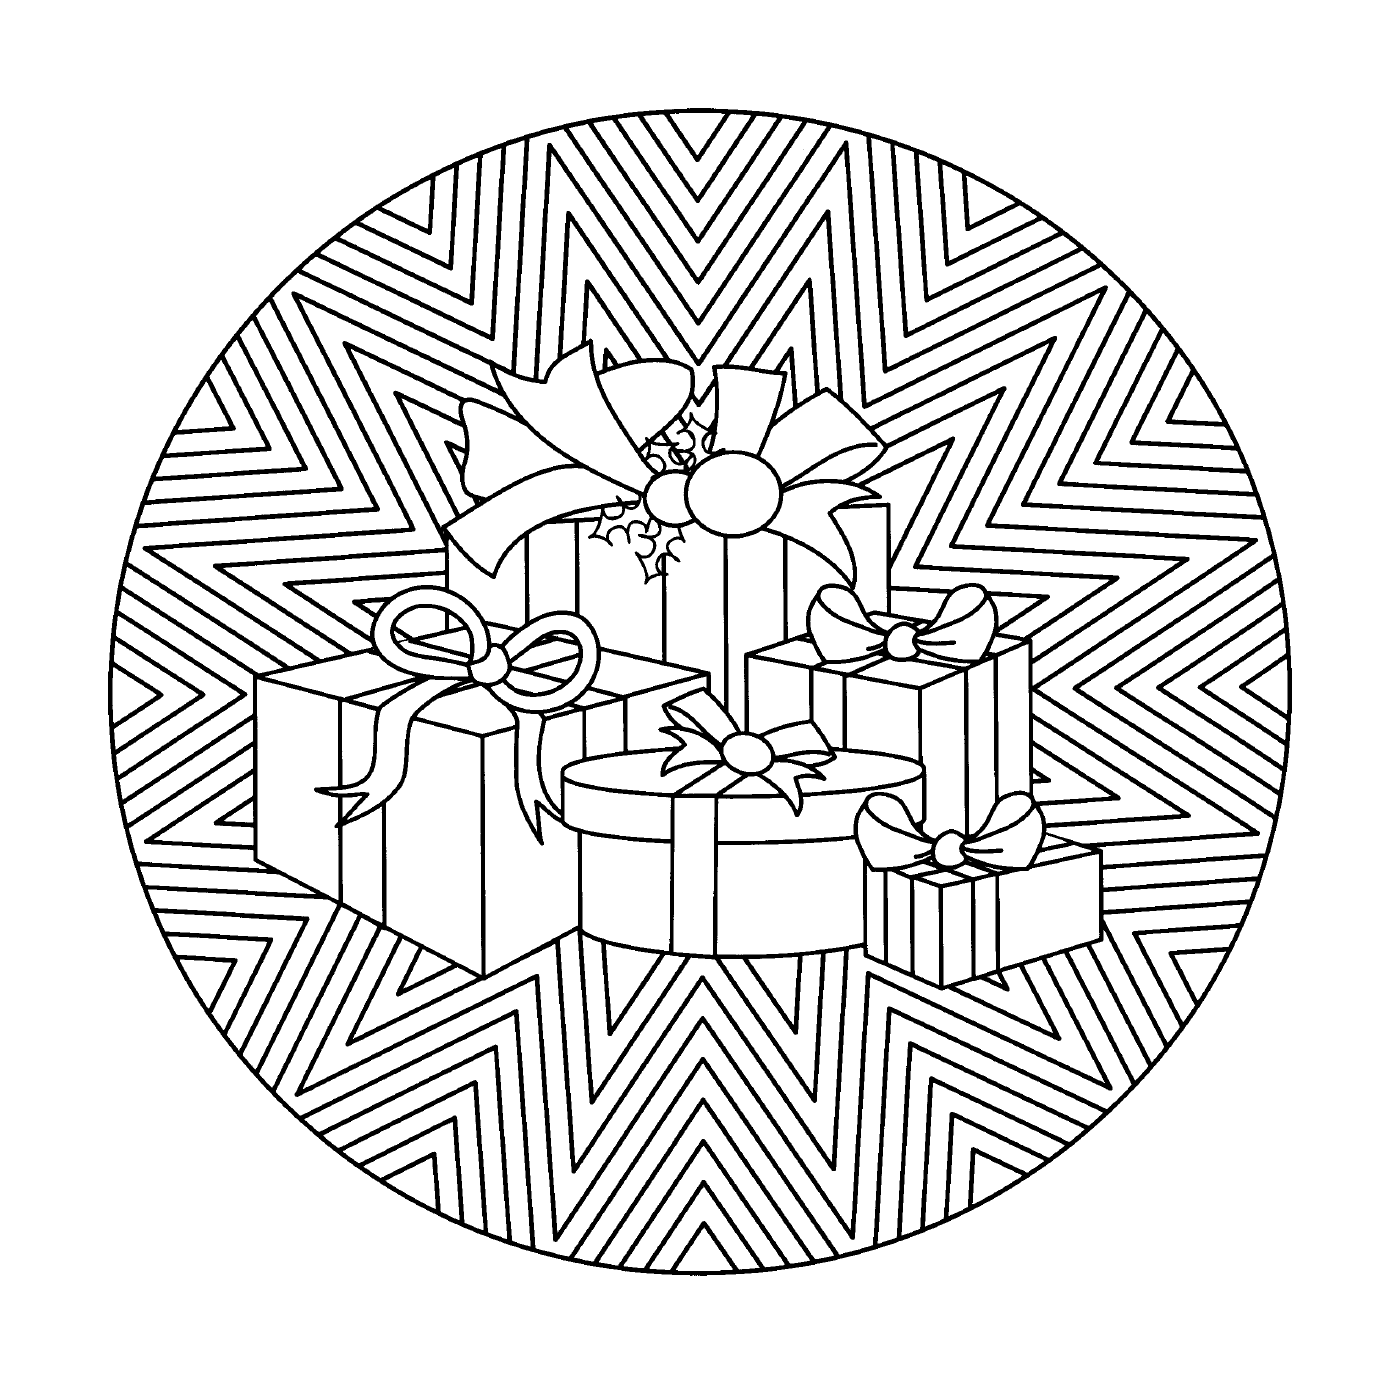  Mandala with gifts 